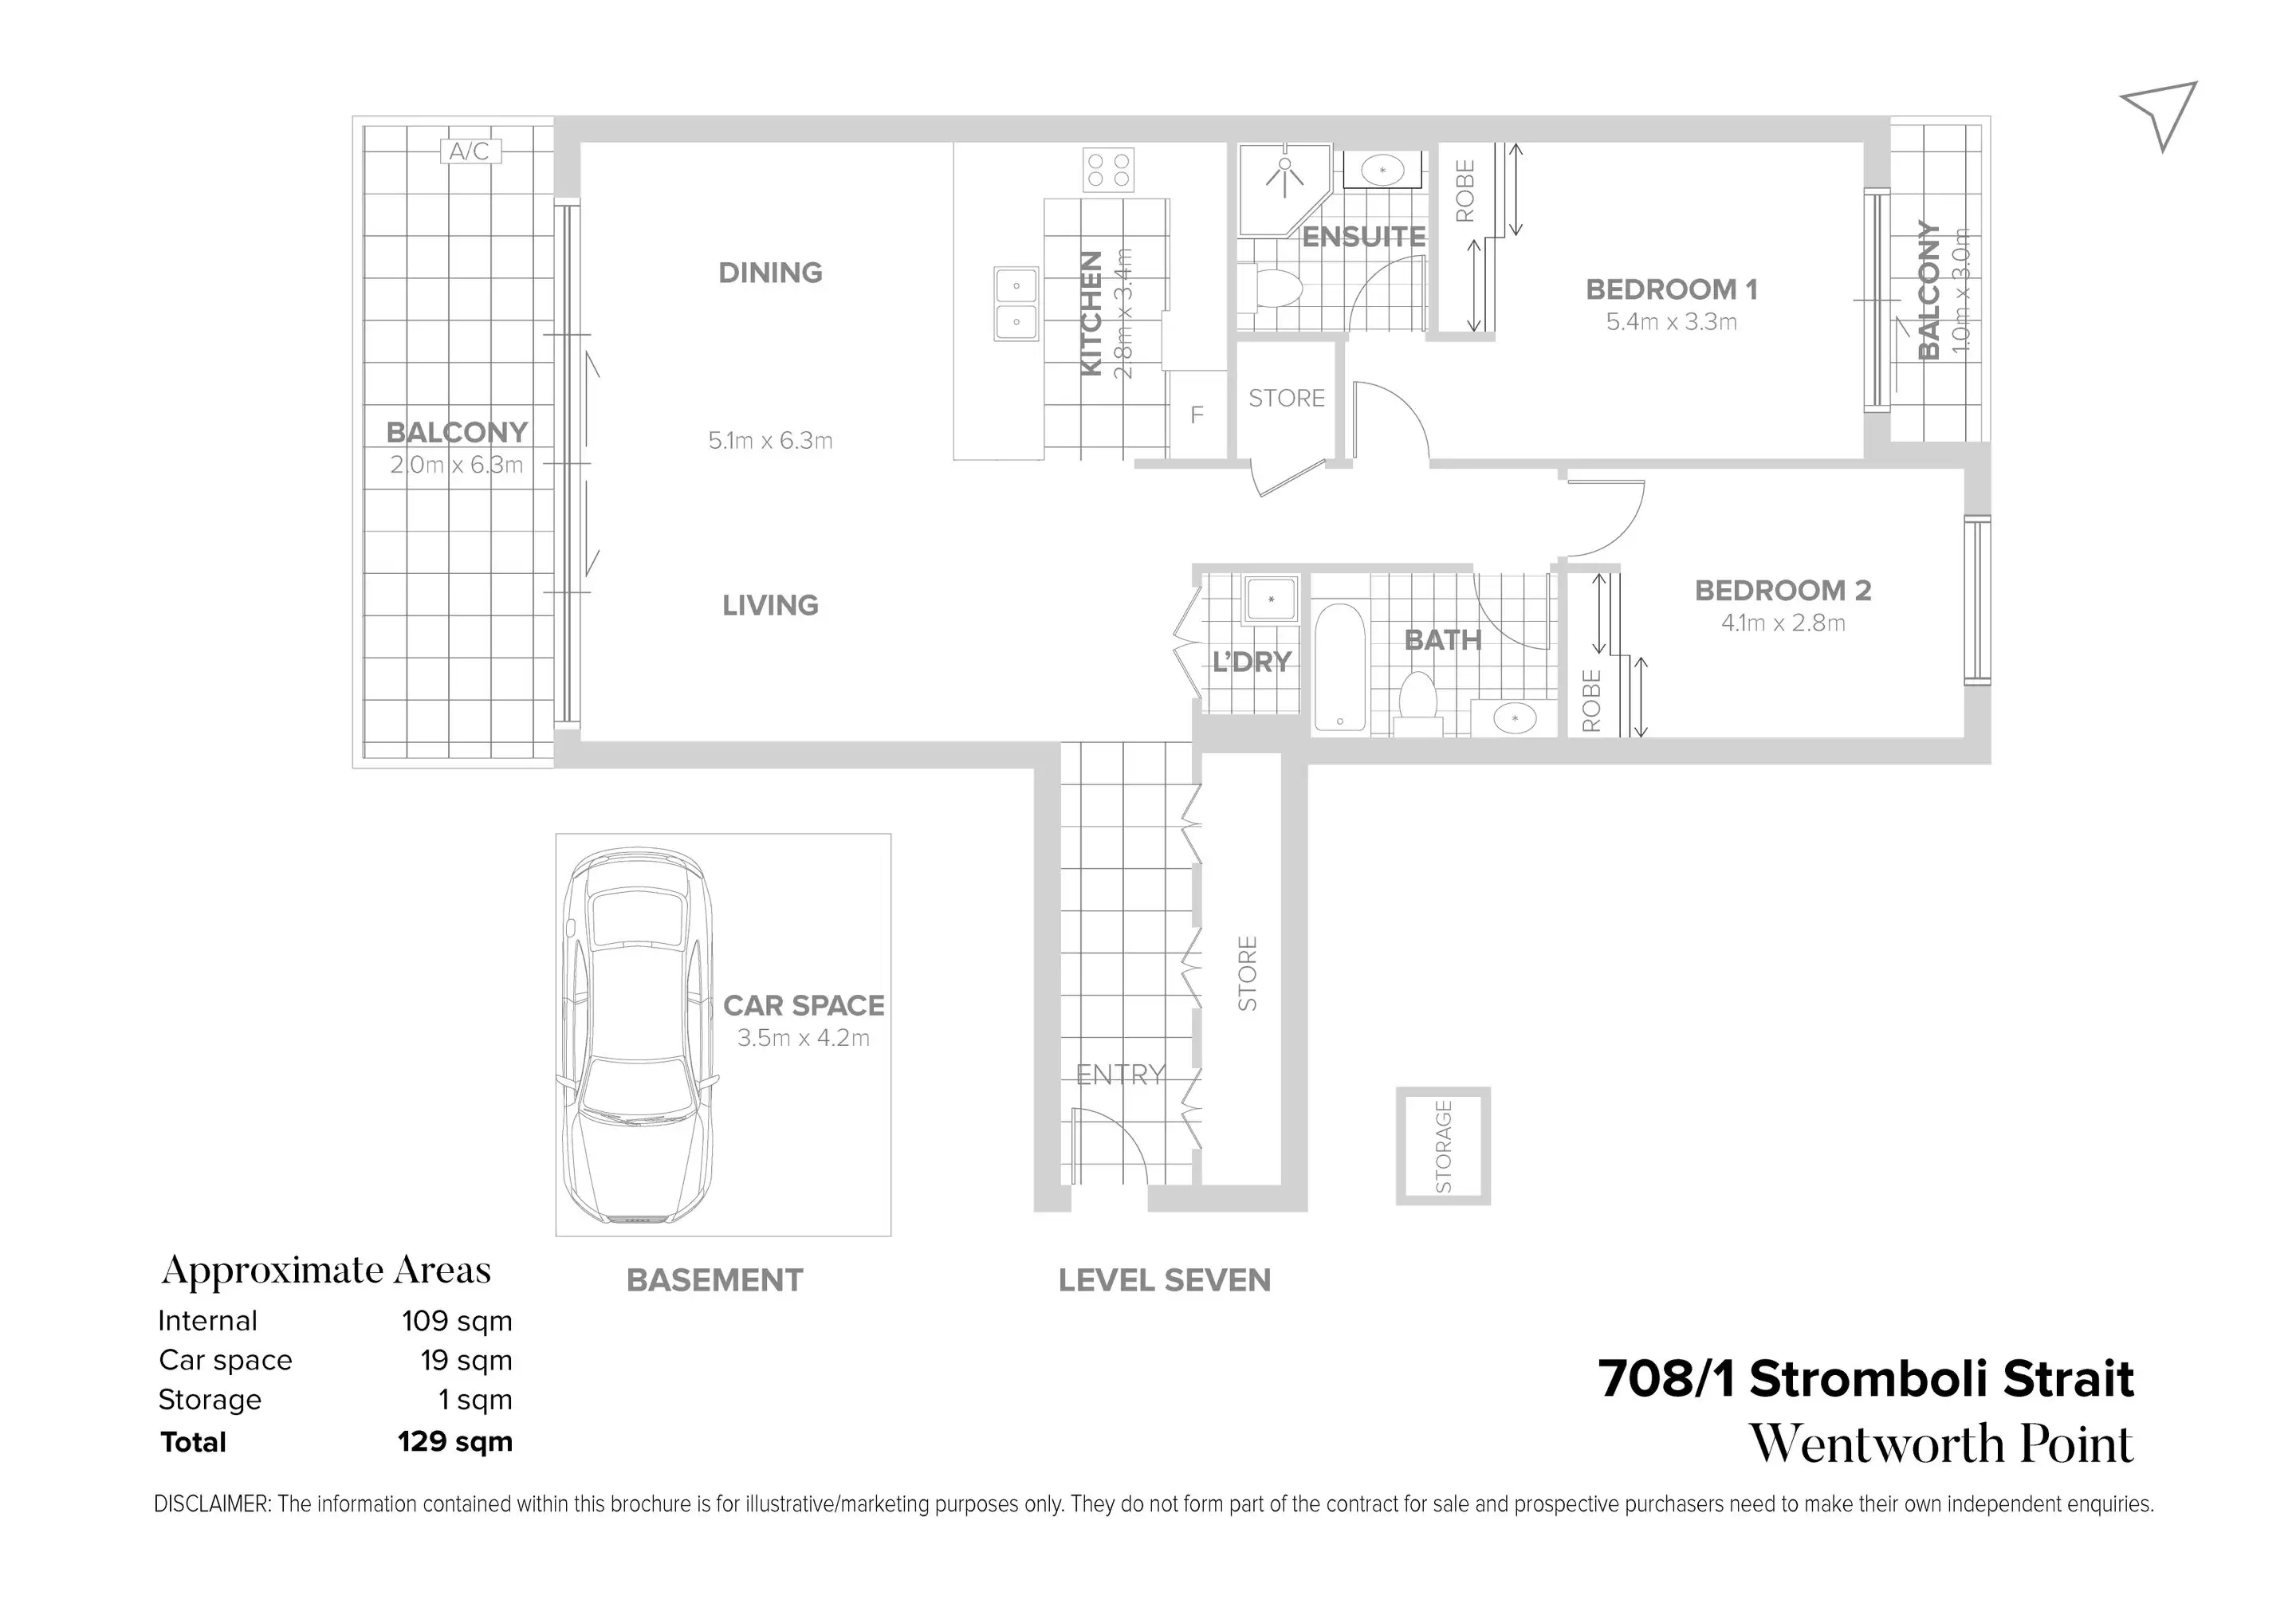 708/1 Stromboli Strait, Wentworth Point Sold by Chidiac Realty - floorplan